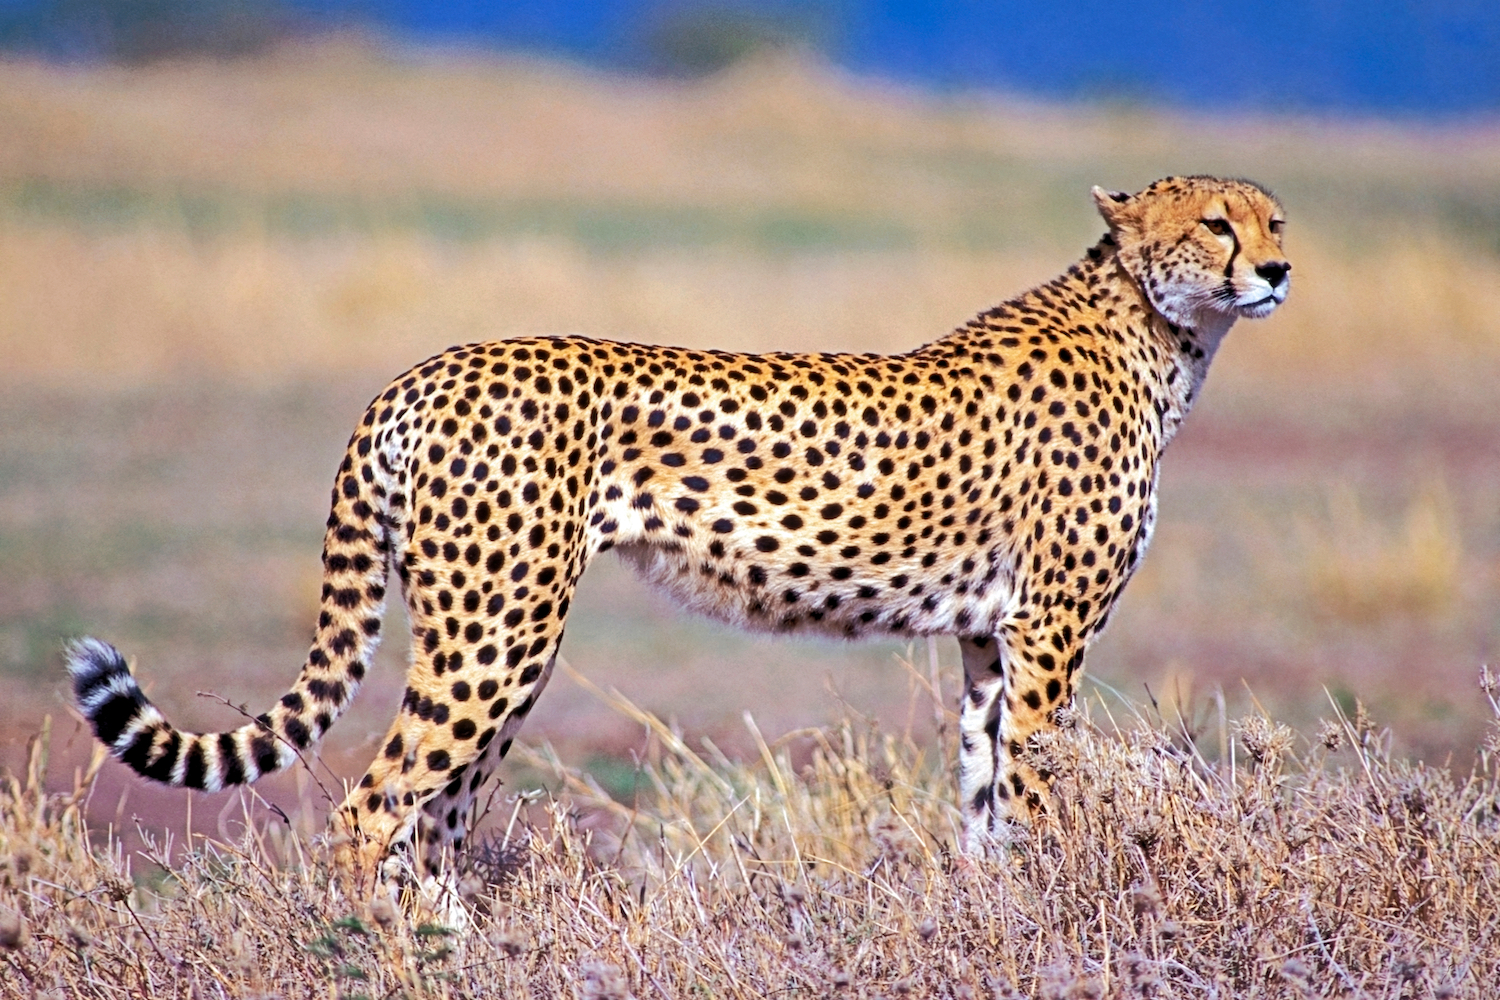 Cheetah at Masai Mara game reserve Kenya Africa